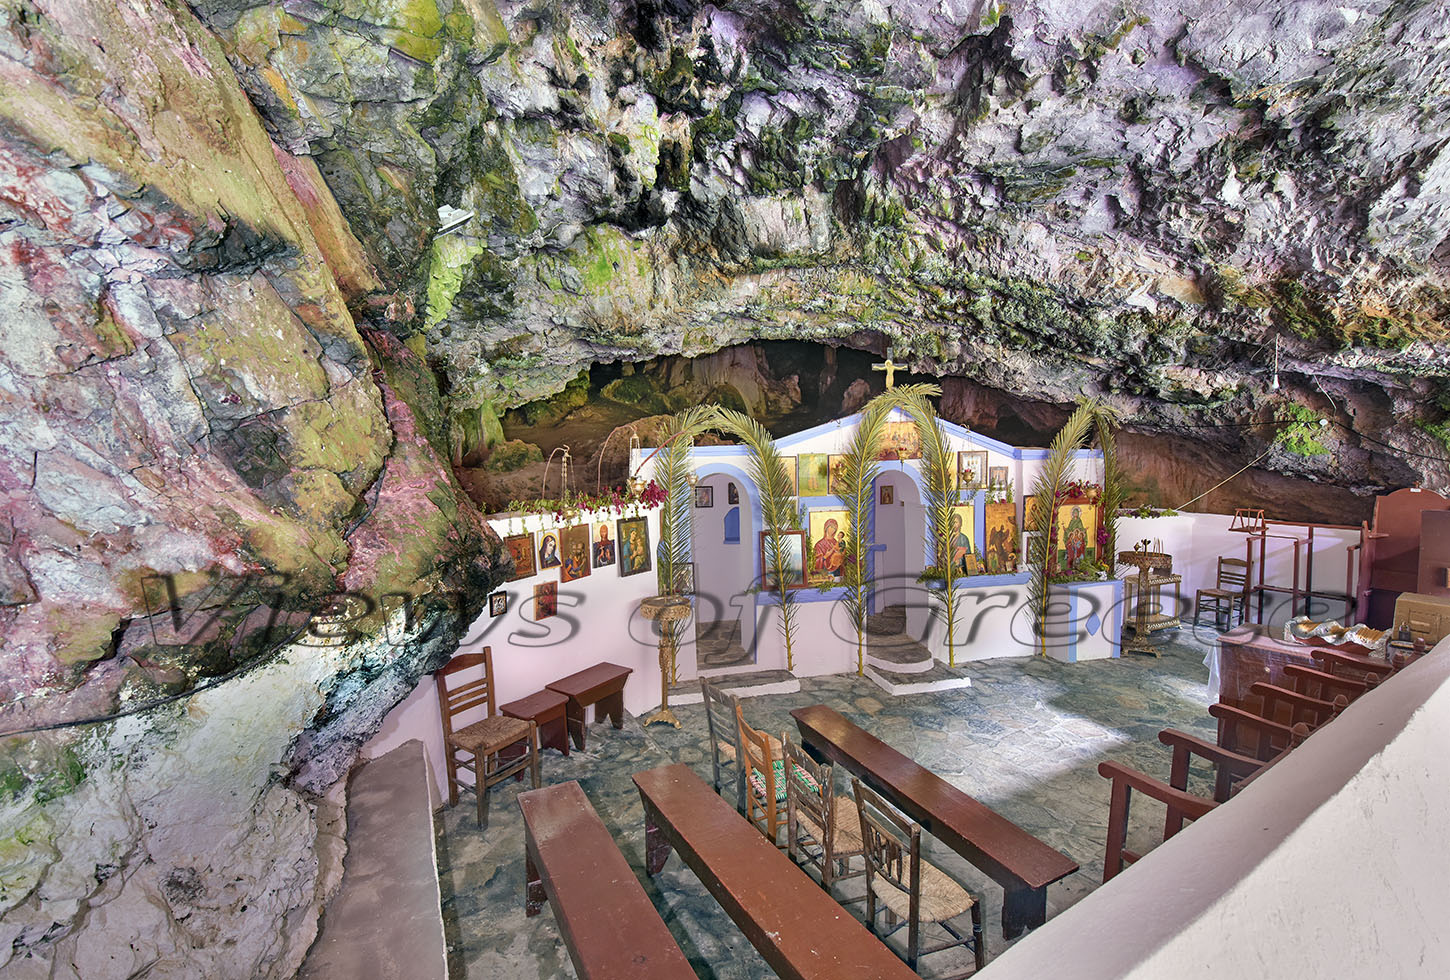 Kythira Κύθηρα. Το σπήλαιο της Αγίας Σοφίας στον Κάλαμο